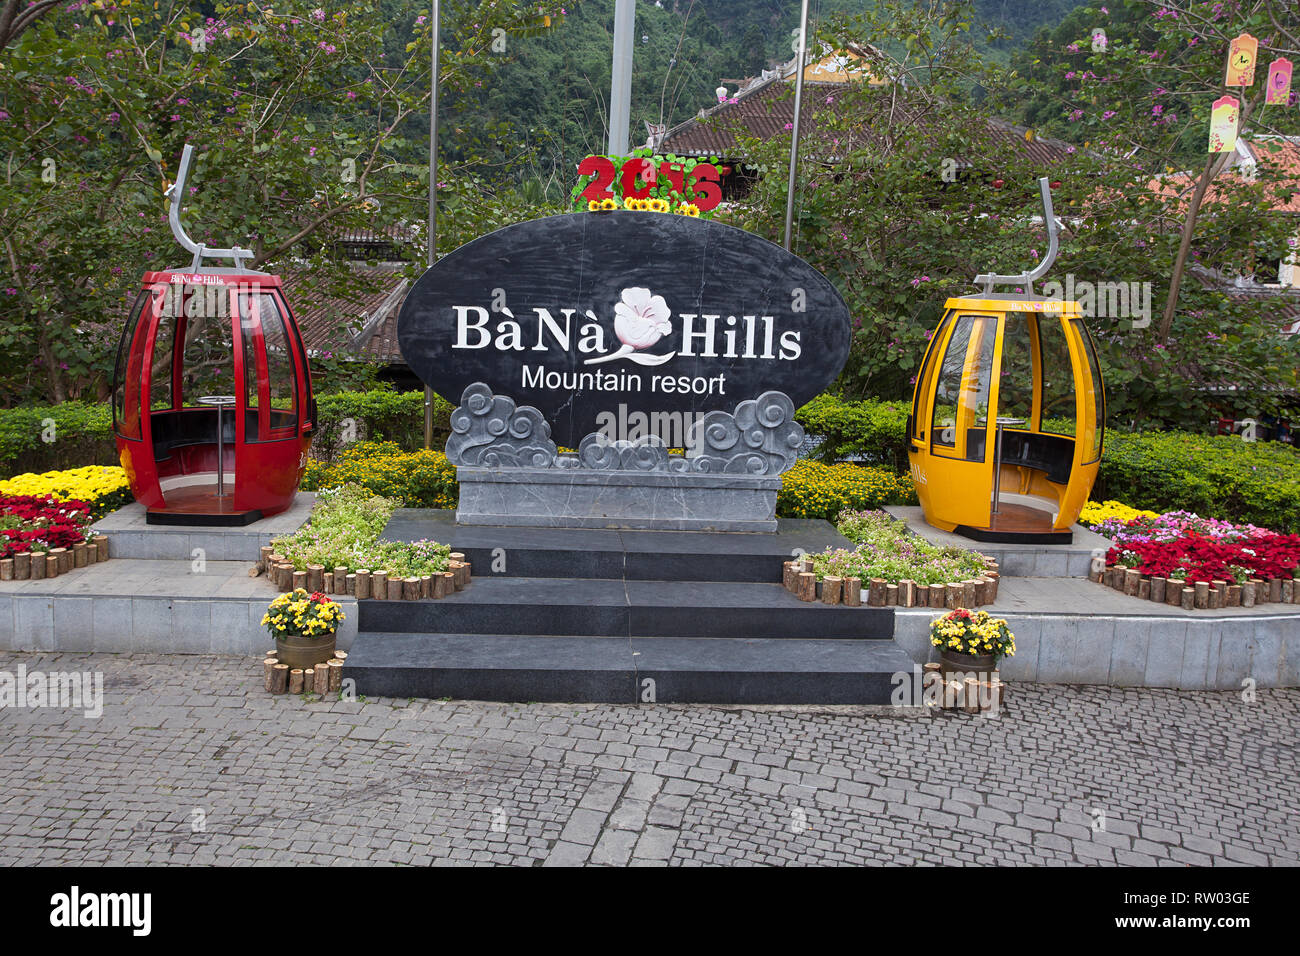 Entrance to the amusement and theme park Bana hill, Danang, Vietnam, Asia Stock Photo